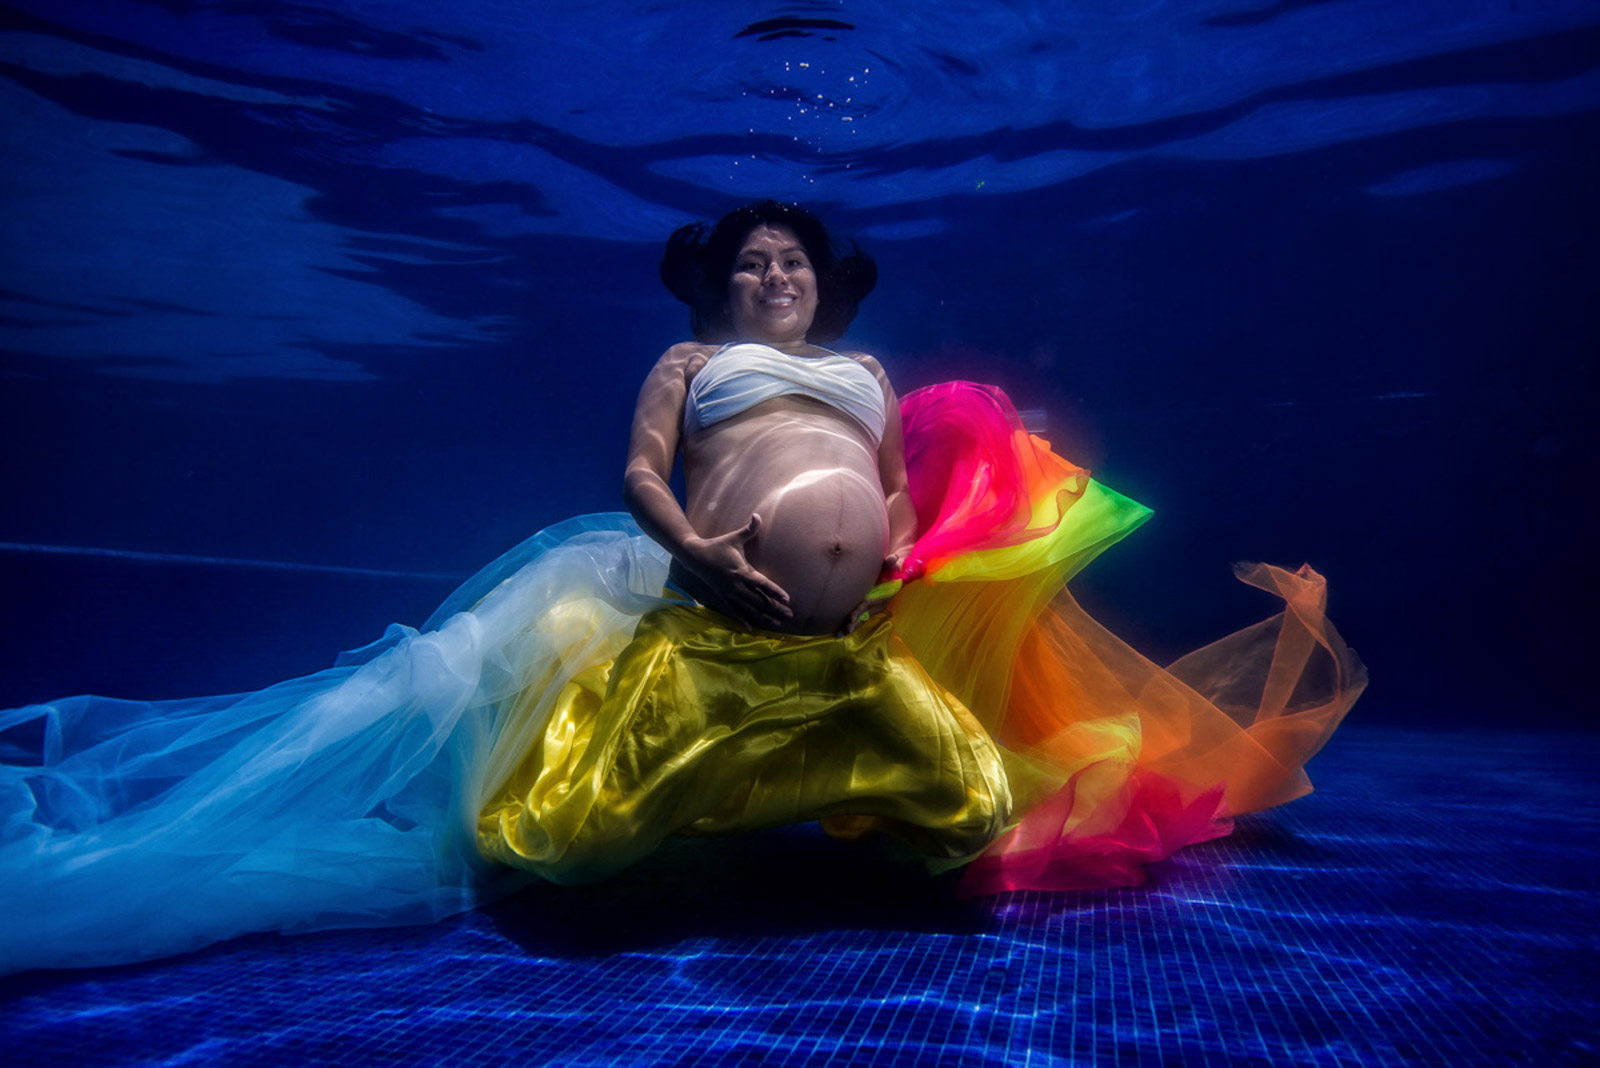 Late pregnancy underwater photos